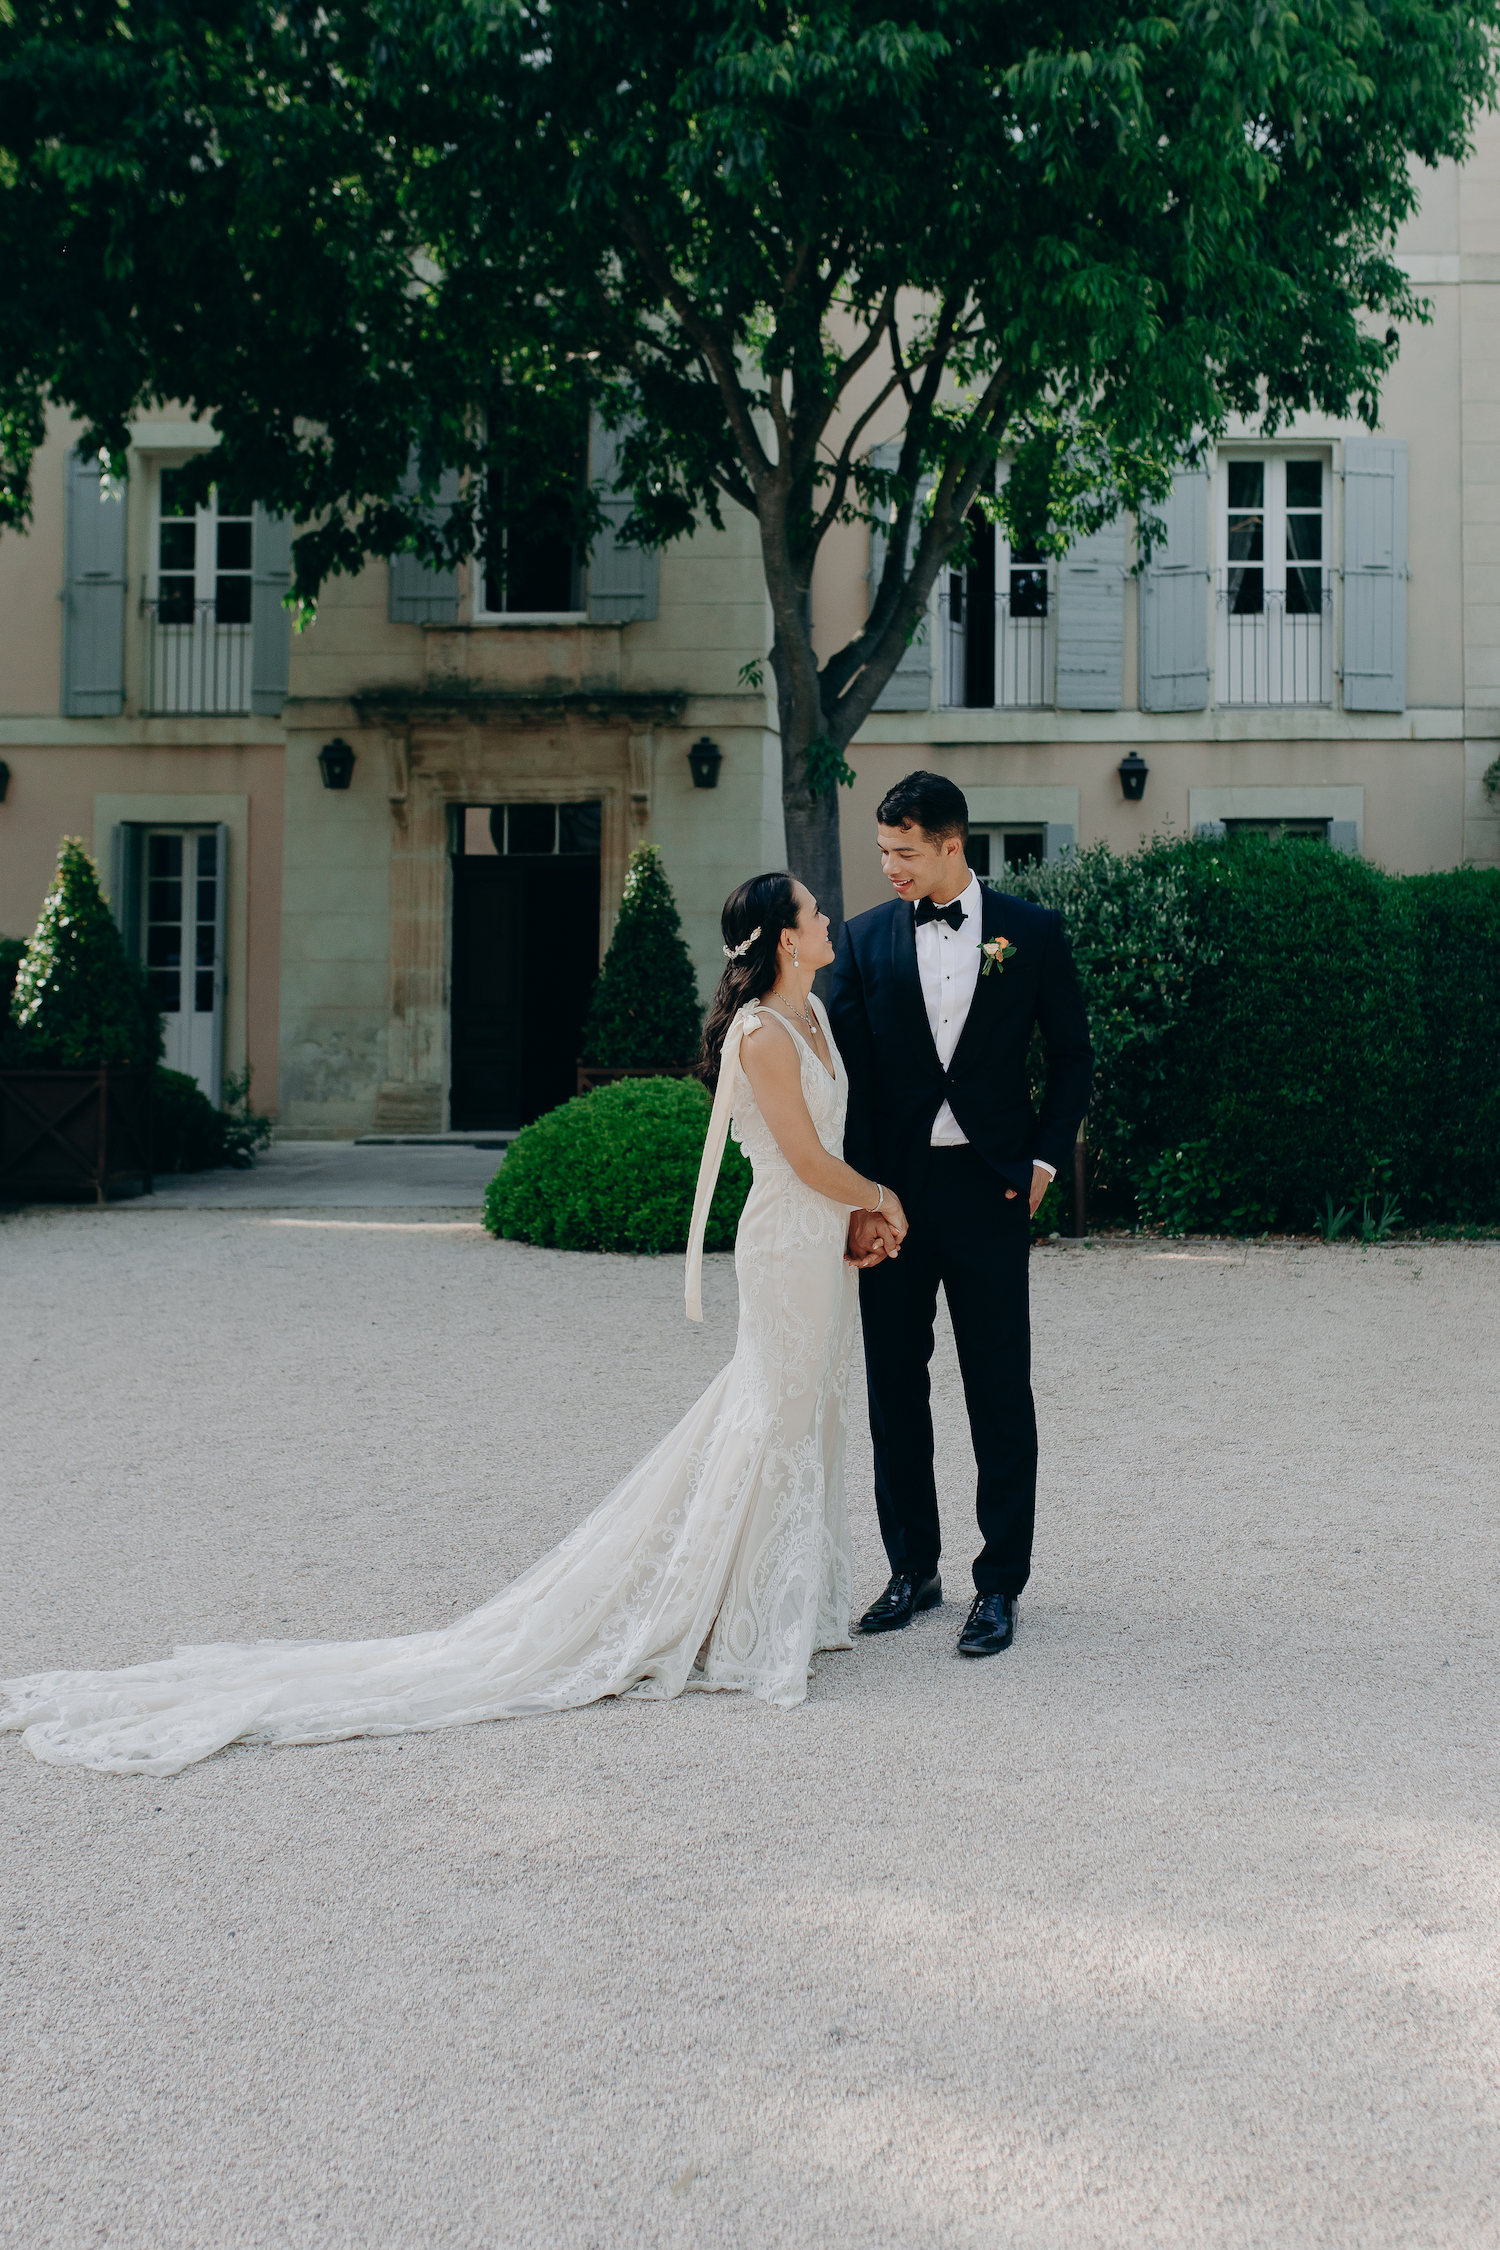 Mariage couture en Provence - Maxine + Owen - Blog Mariage Madame C